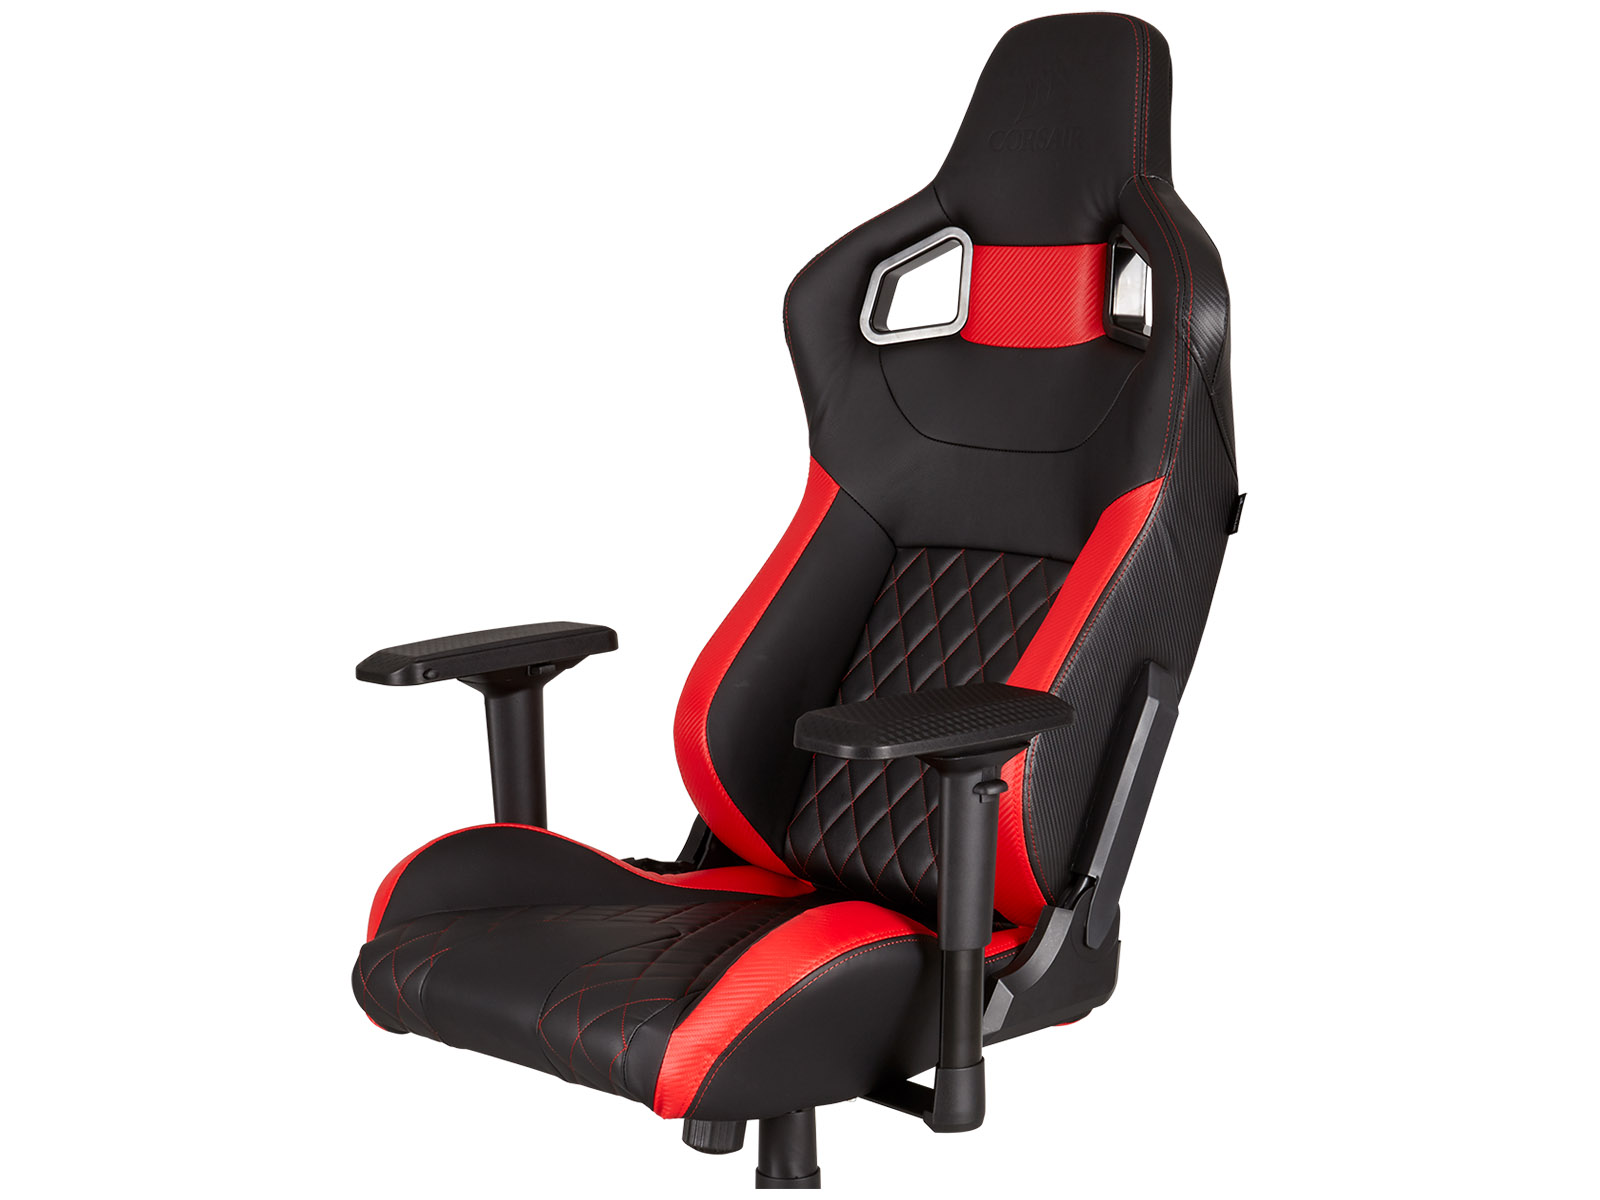 Corsair T1 RACE Chair: Five $350